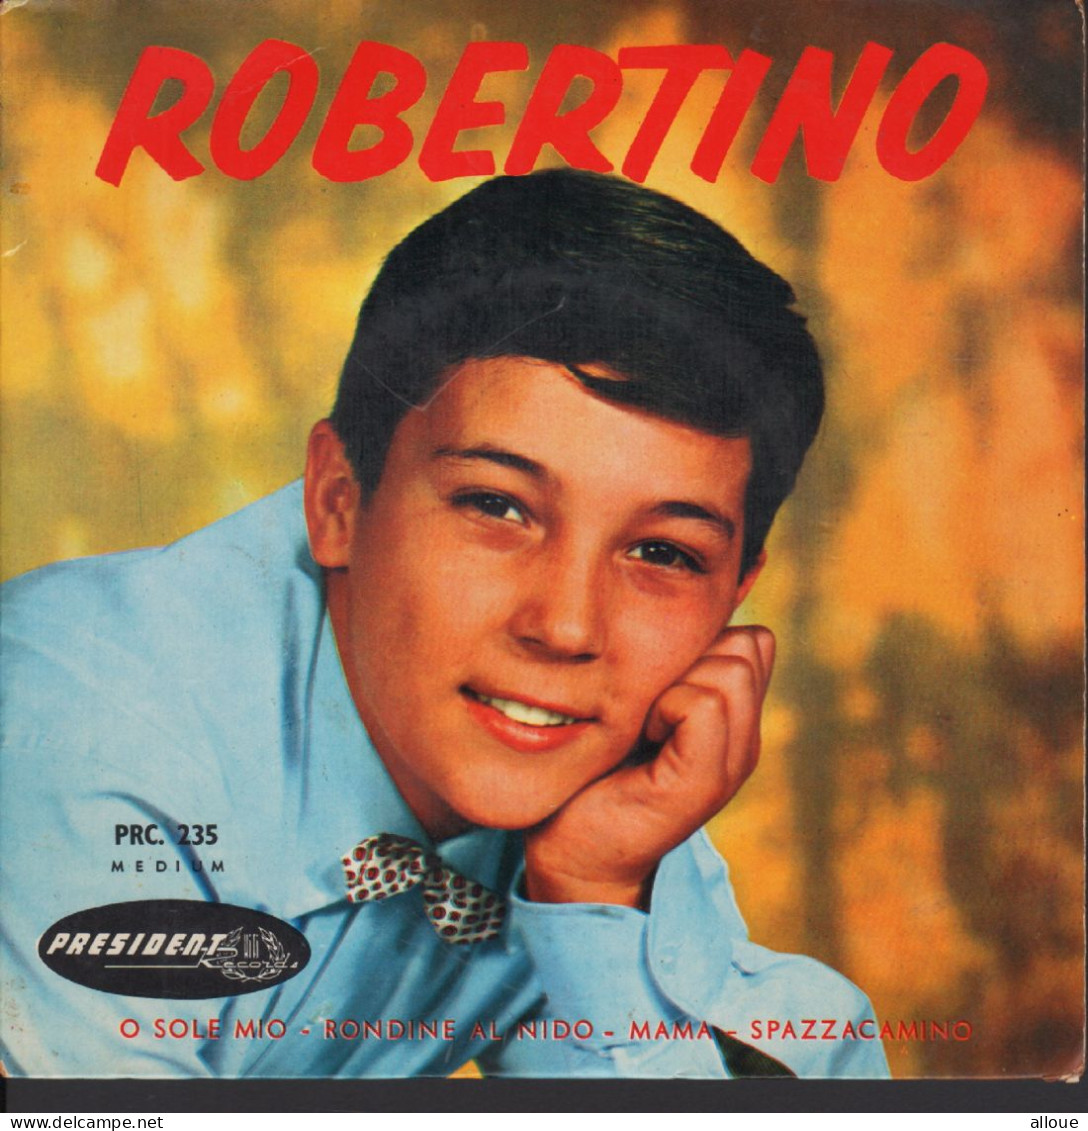 ROBERTINO- FR EP - O SOLE MIO + 3 - Andere - Italiaans